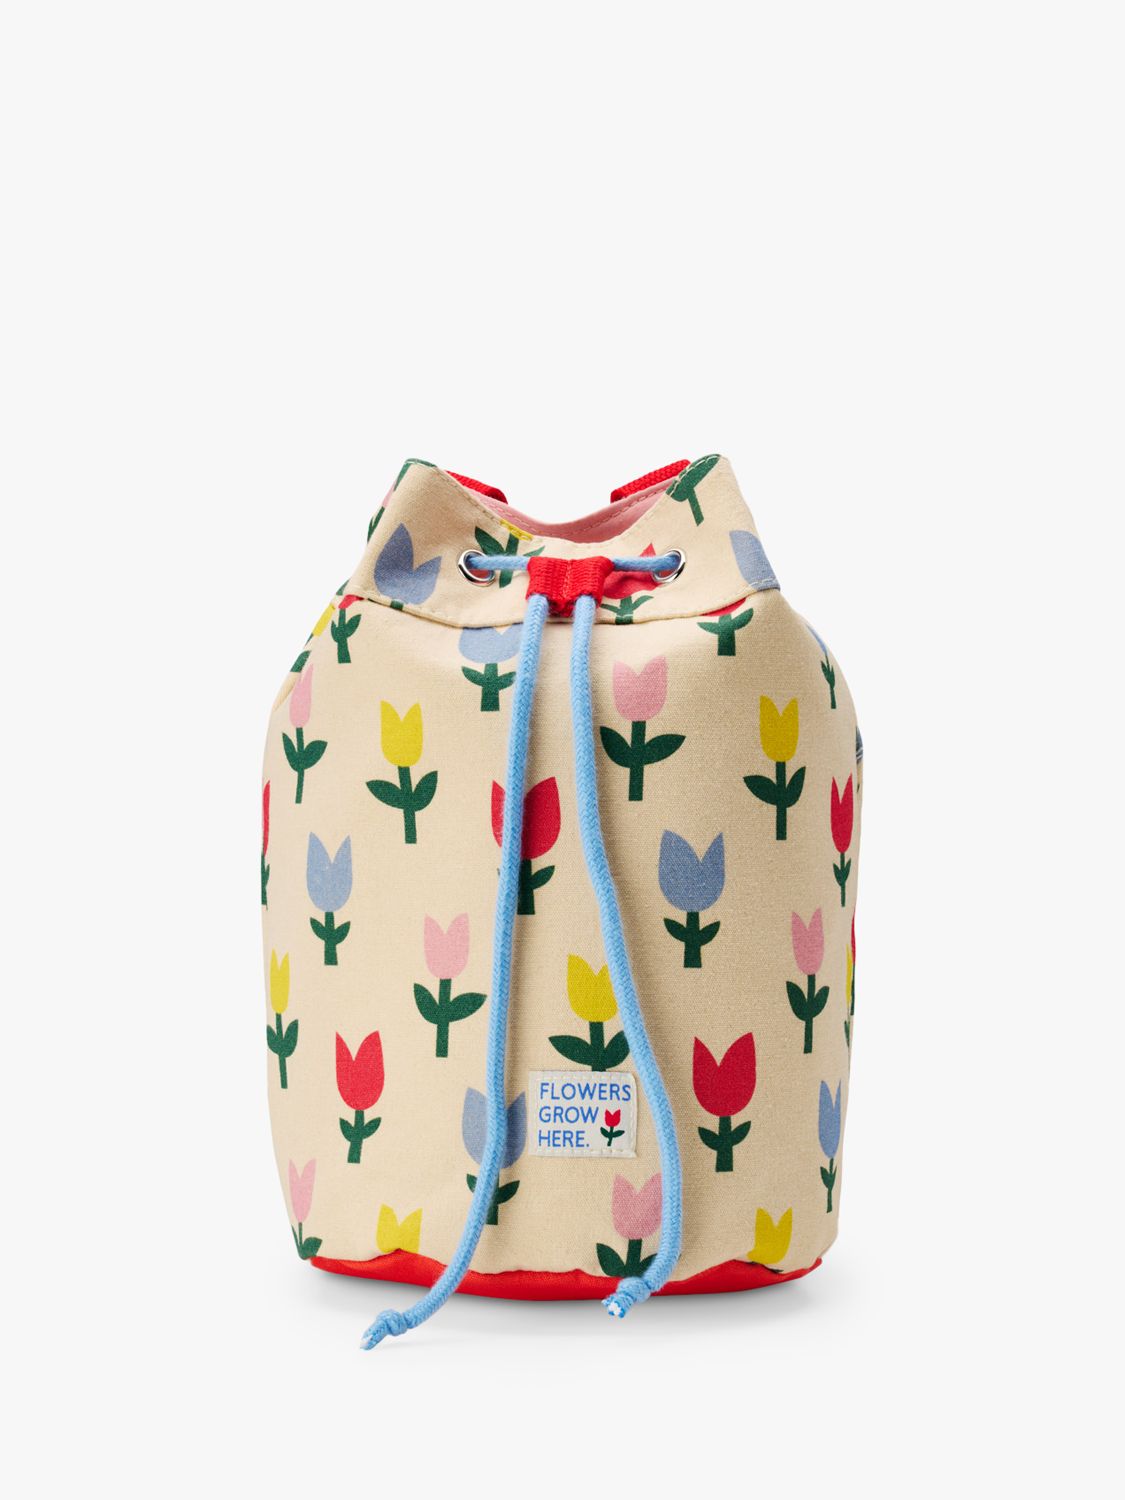 Small Stuff Kids' Canvas Tulip Drawstring Duffle Bag, Multi, One Size